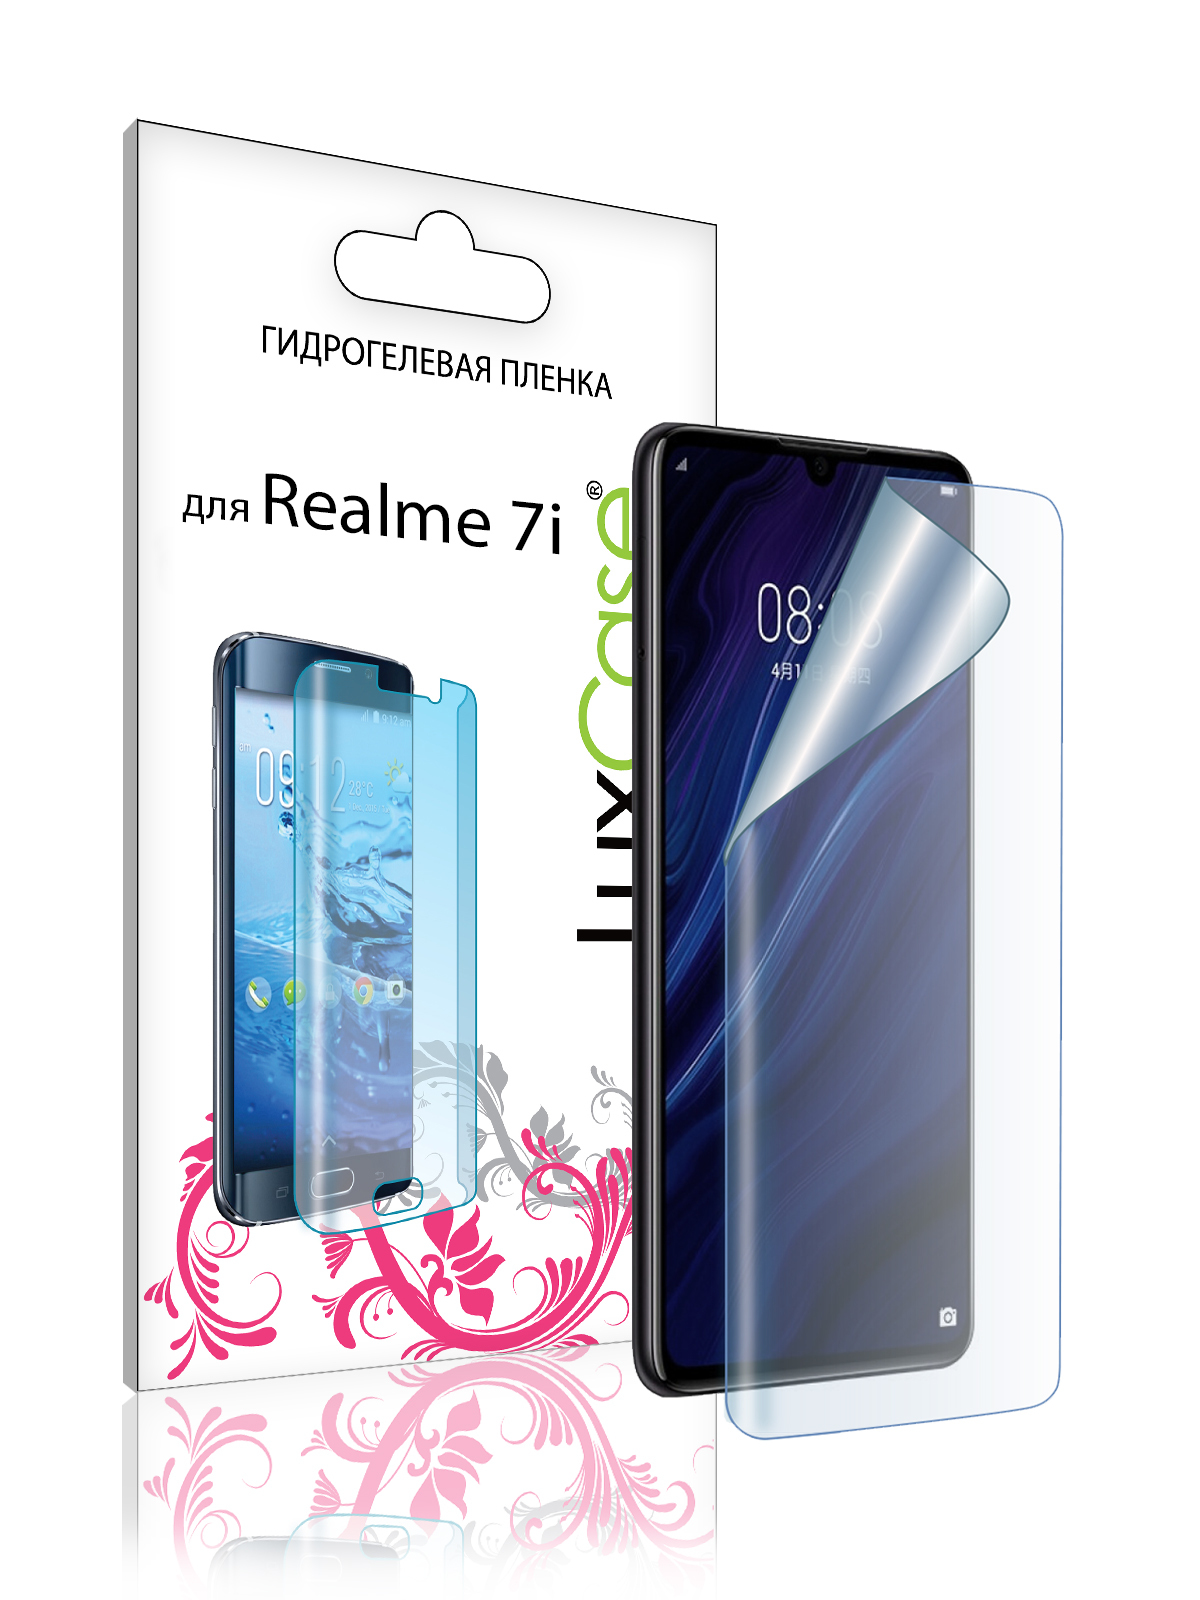 Пленка гидрогелевая LuxCase для Realme 7i 0.14mm Front Transparent 86591 пленка гидрогелевая luxcase для realme 7i 0 14mm front and back transparent 86593